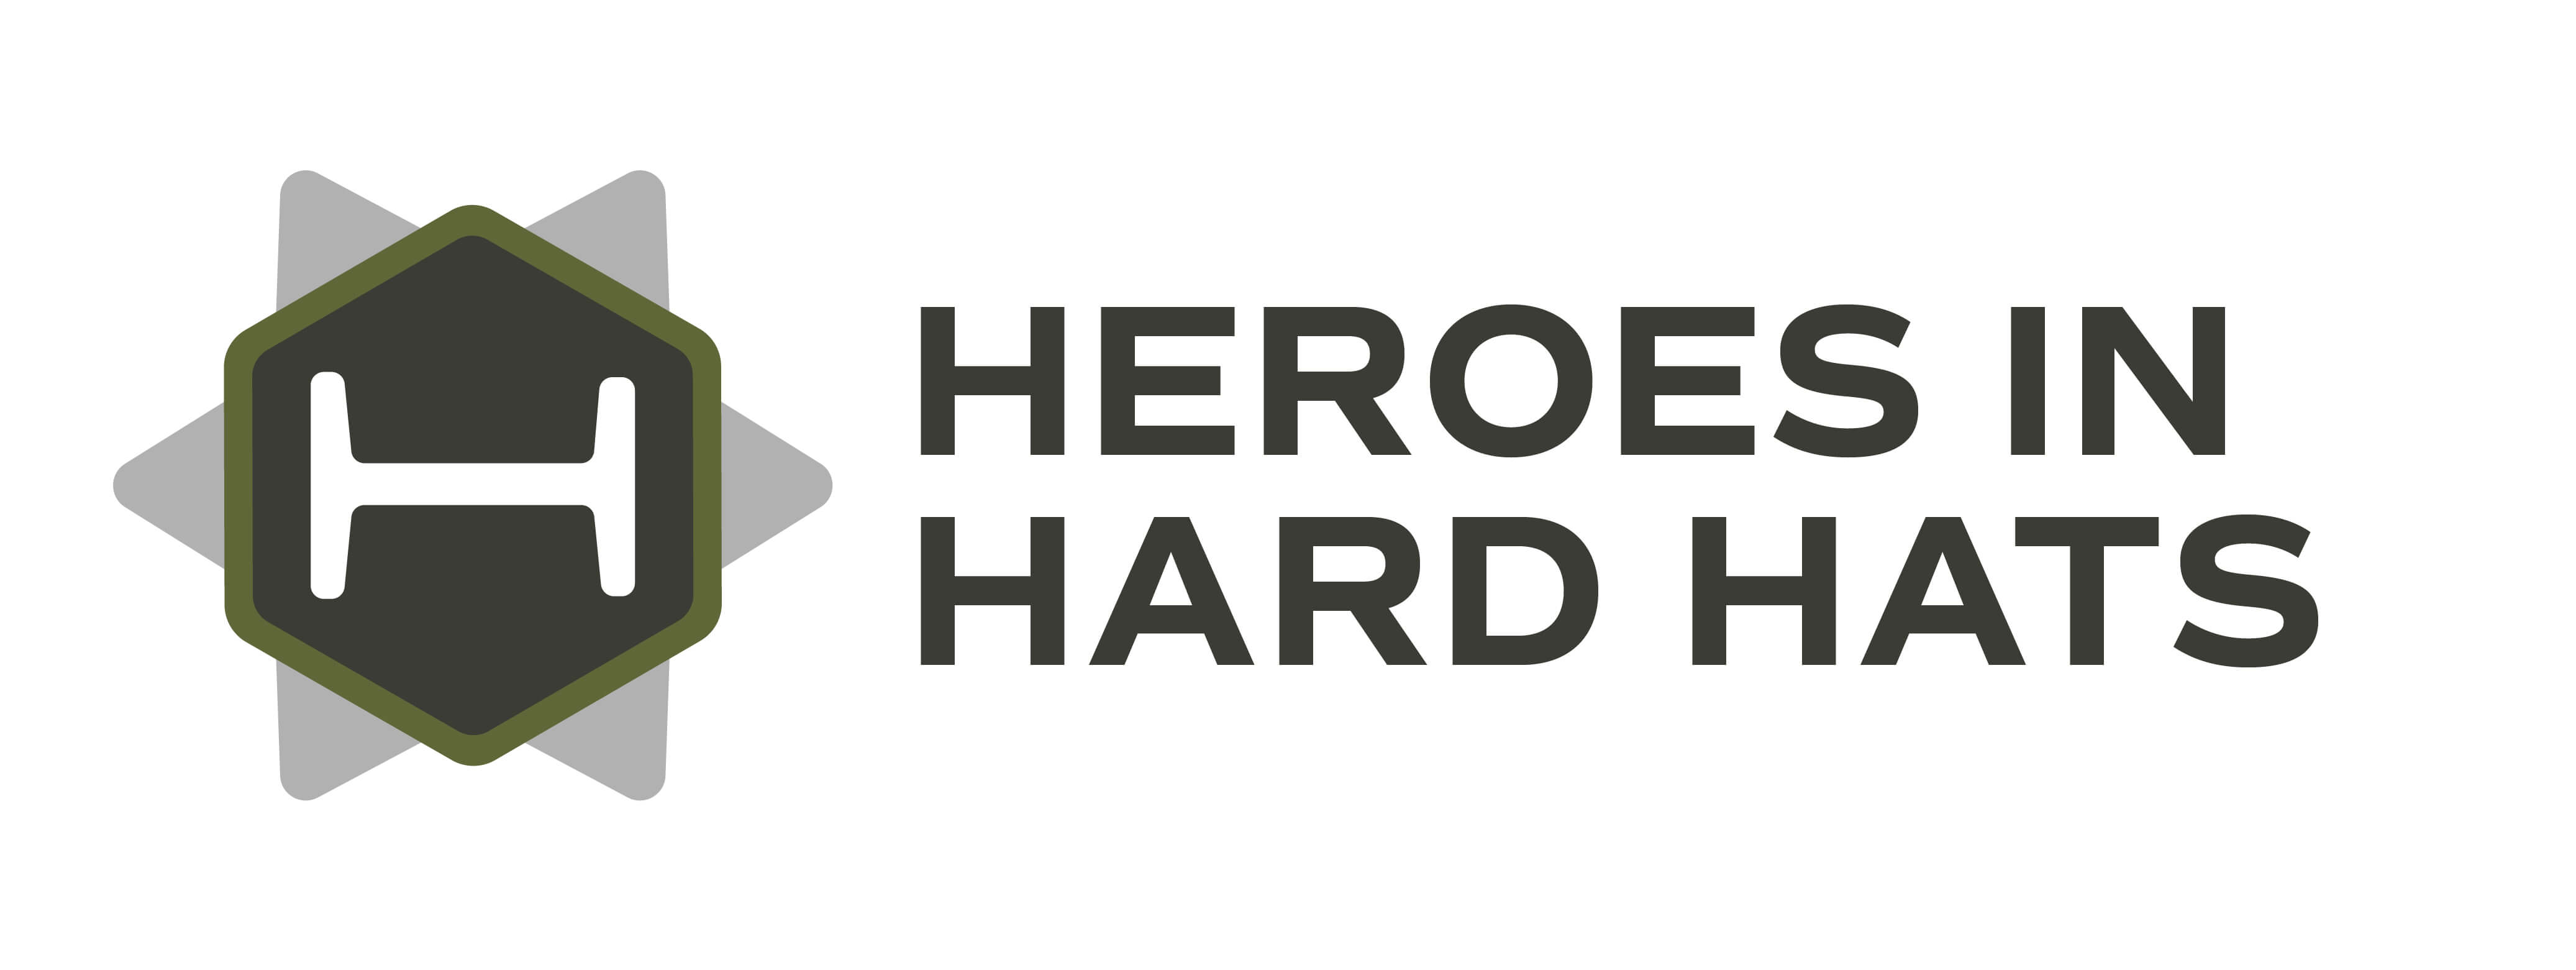 Hats Logo - Heroes in Hard Hats logo – compoundEye